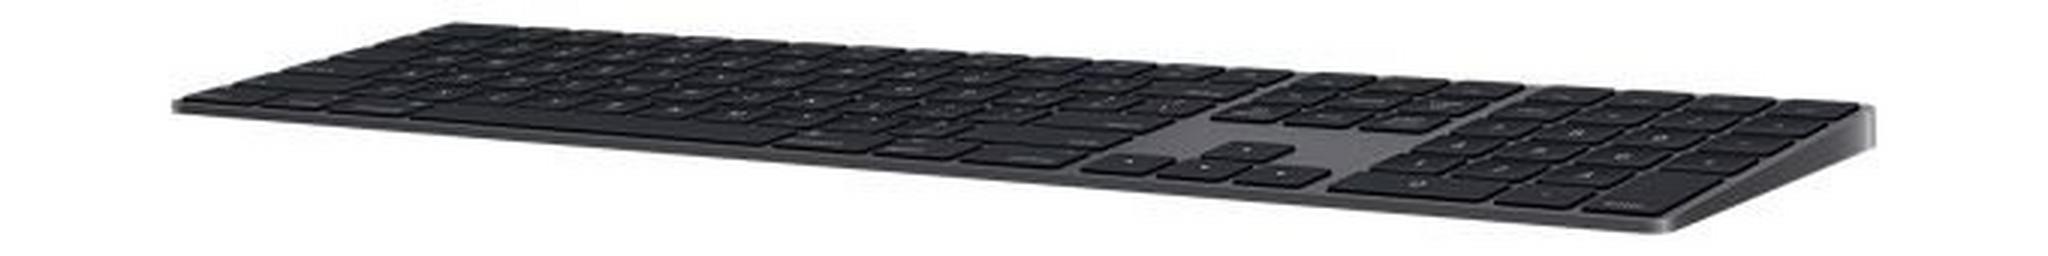 Apple Magic Arabic Keyboard with Numeric Keypad - Grey